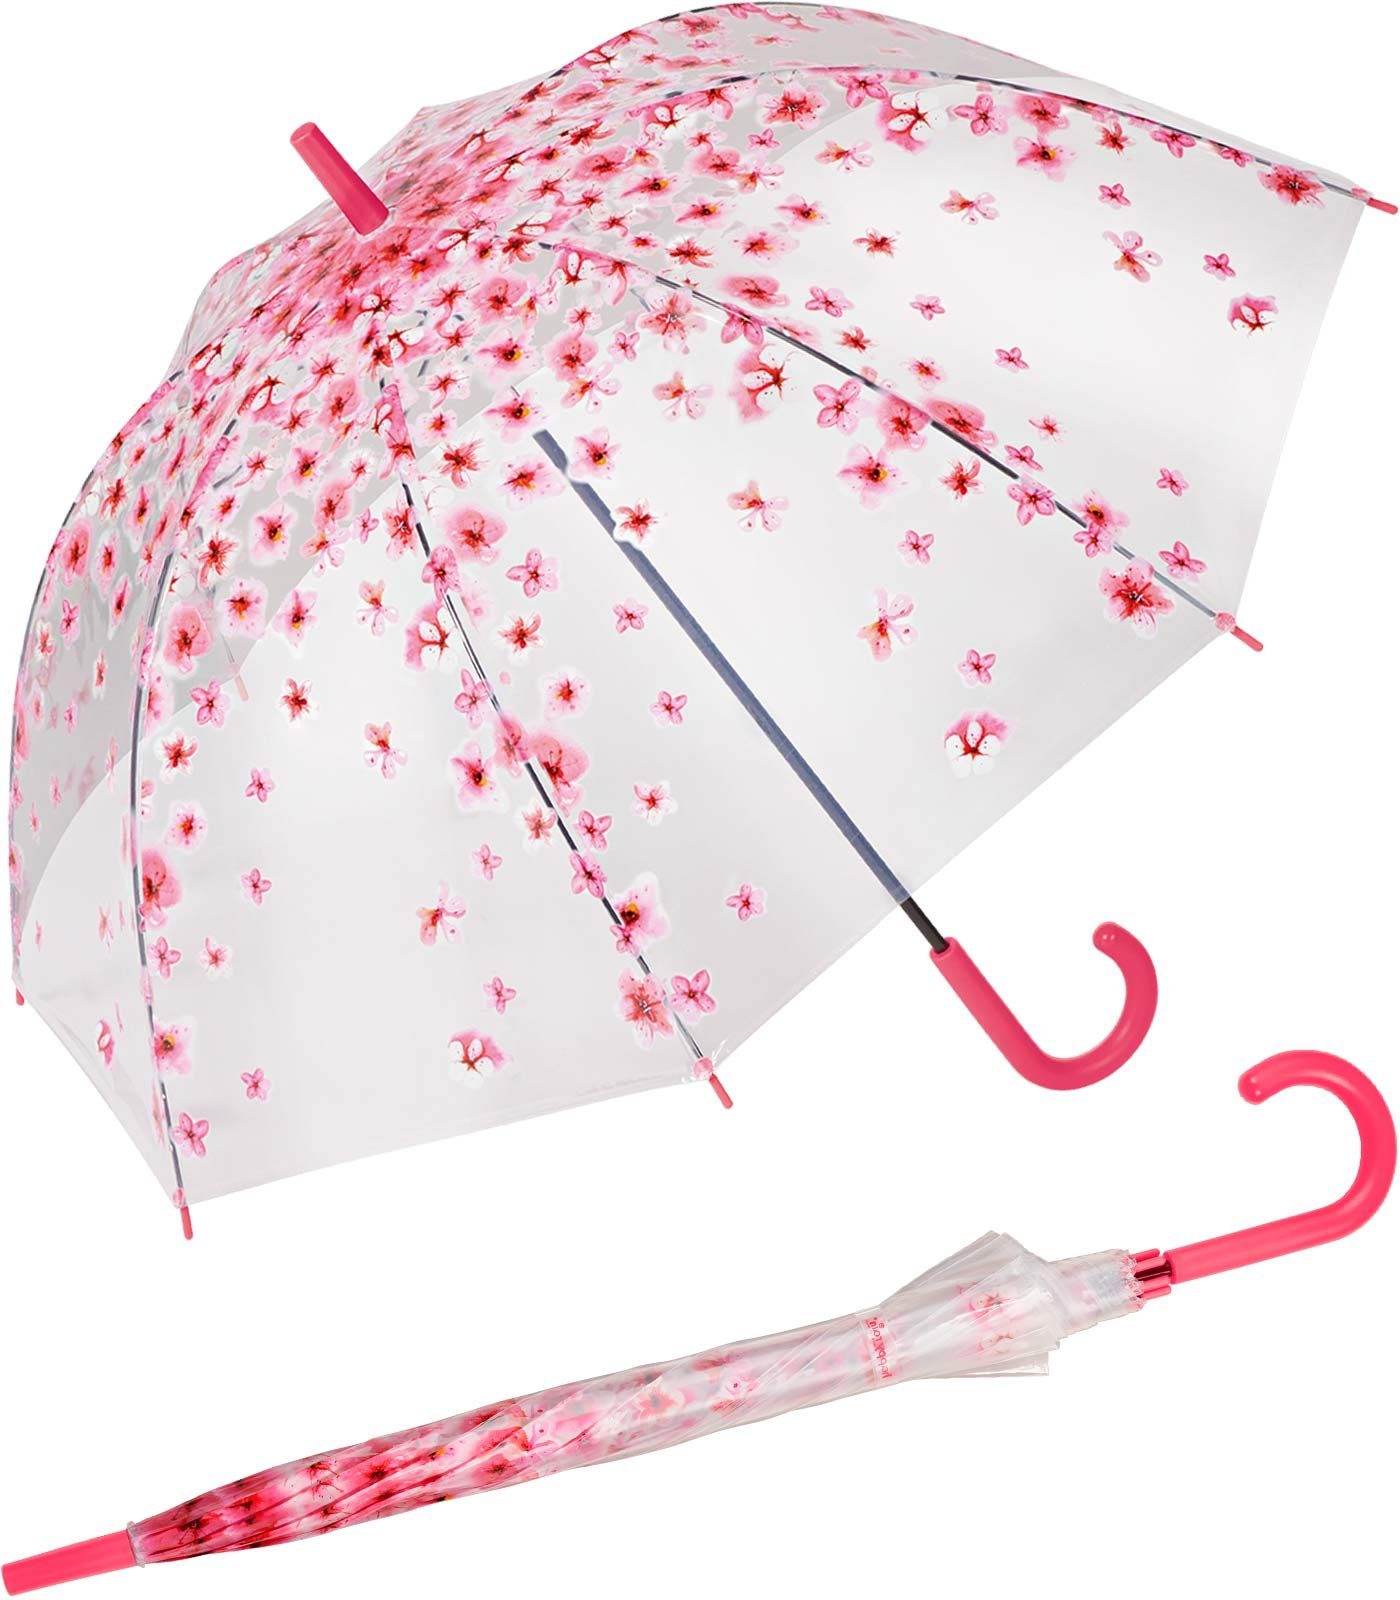 HAPPY RAIN Langregenschirm durchsichtiger, stabiler pinkfarbenen Blüten bedruckt mit Damen-Transparentschirm